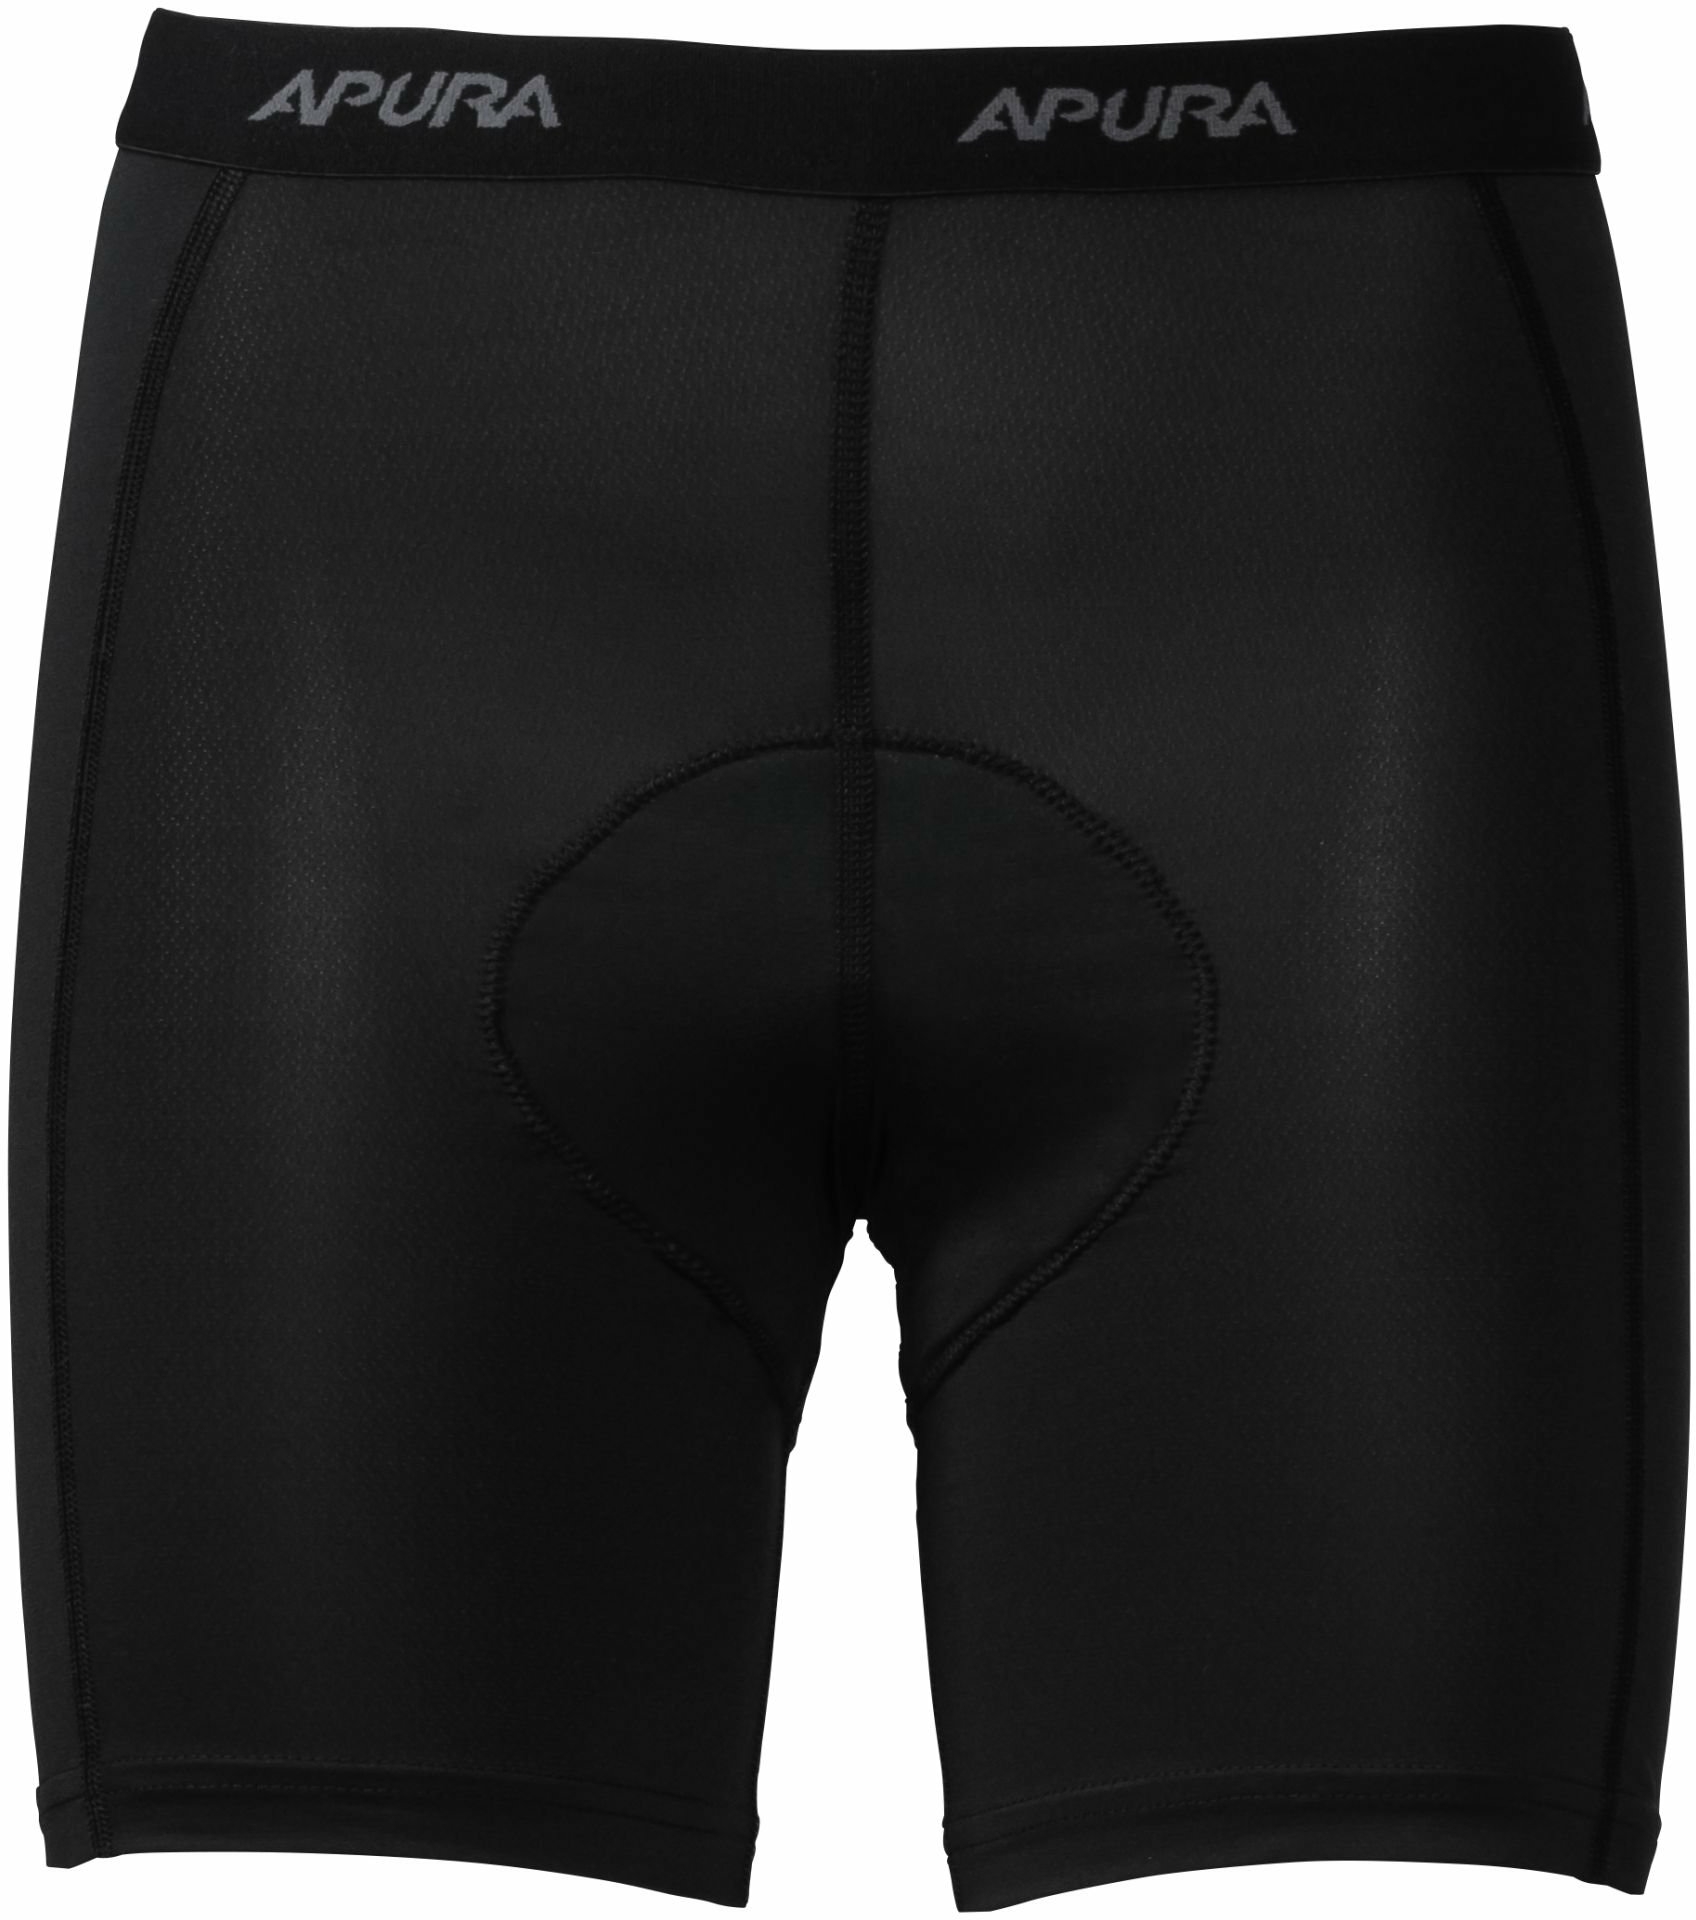 Bekleidung/Unterwäsche: Apura  Damen Unterhose Baselayer Short Pro Comfort L 